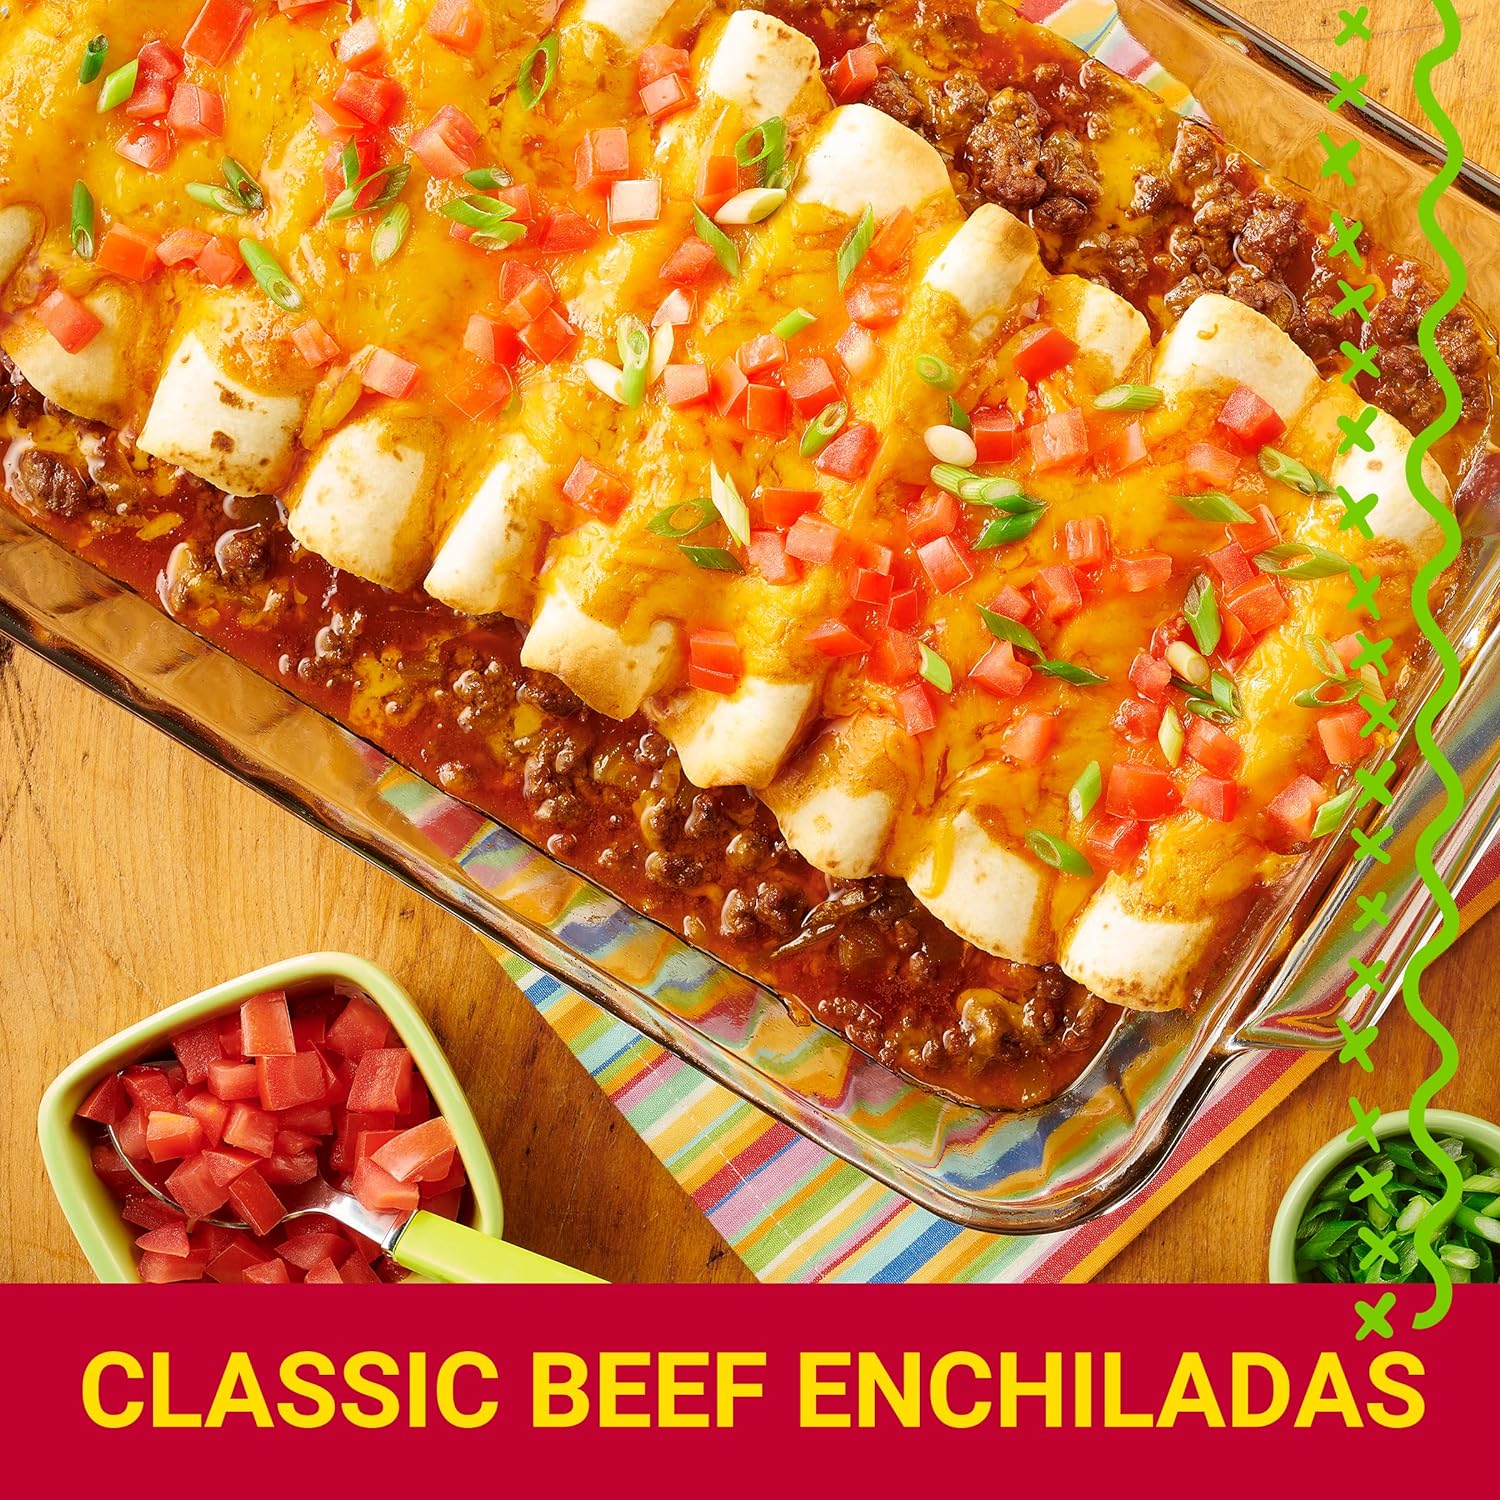 Old El Paso Soft Taco Dinner Kit, 12.5 oz. : Taco Shells : Everything Else